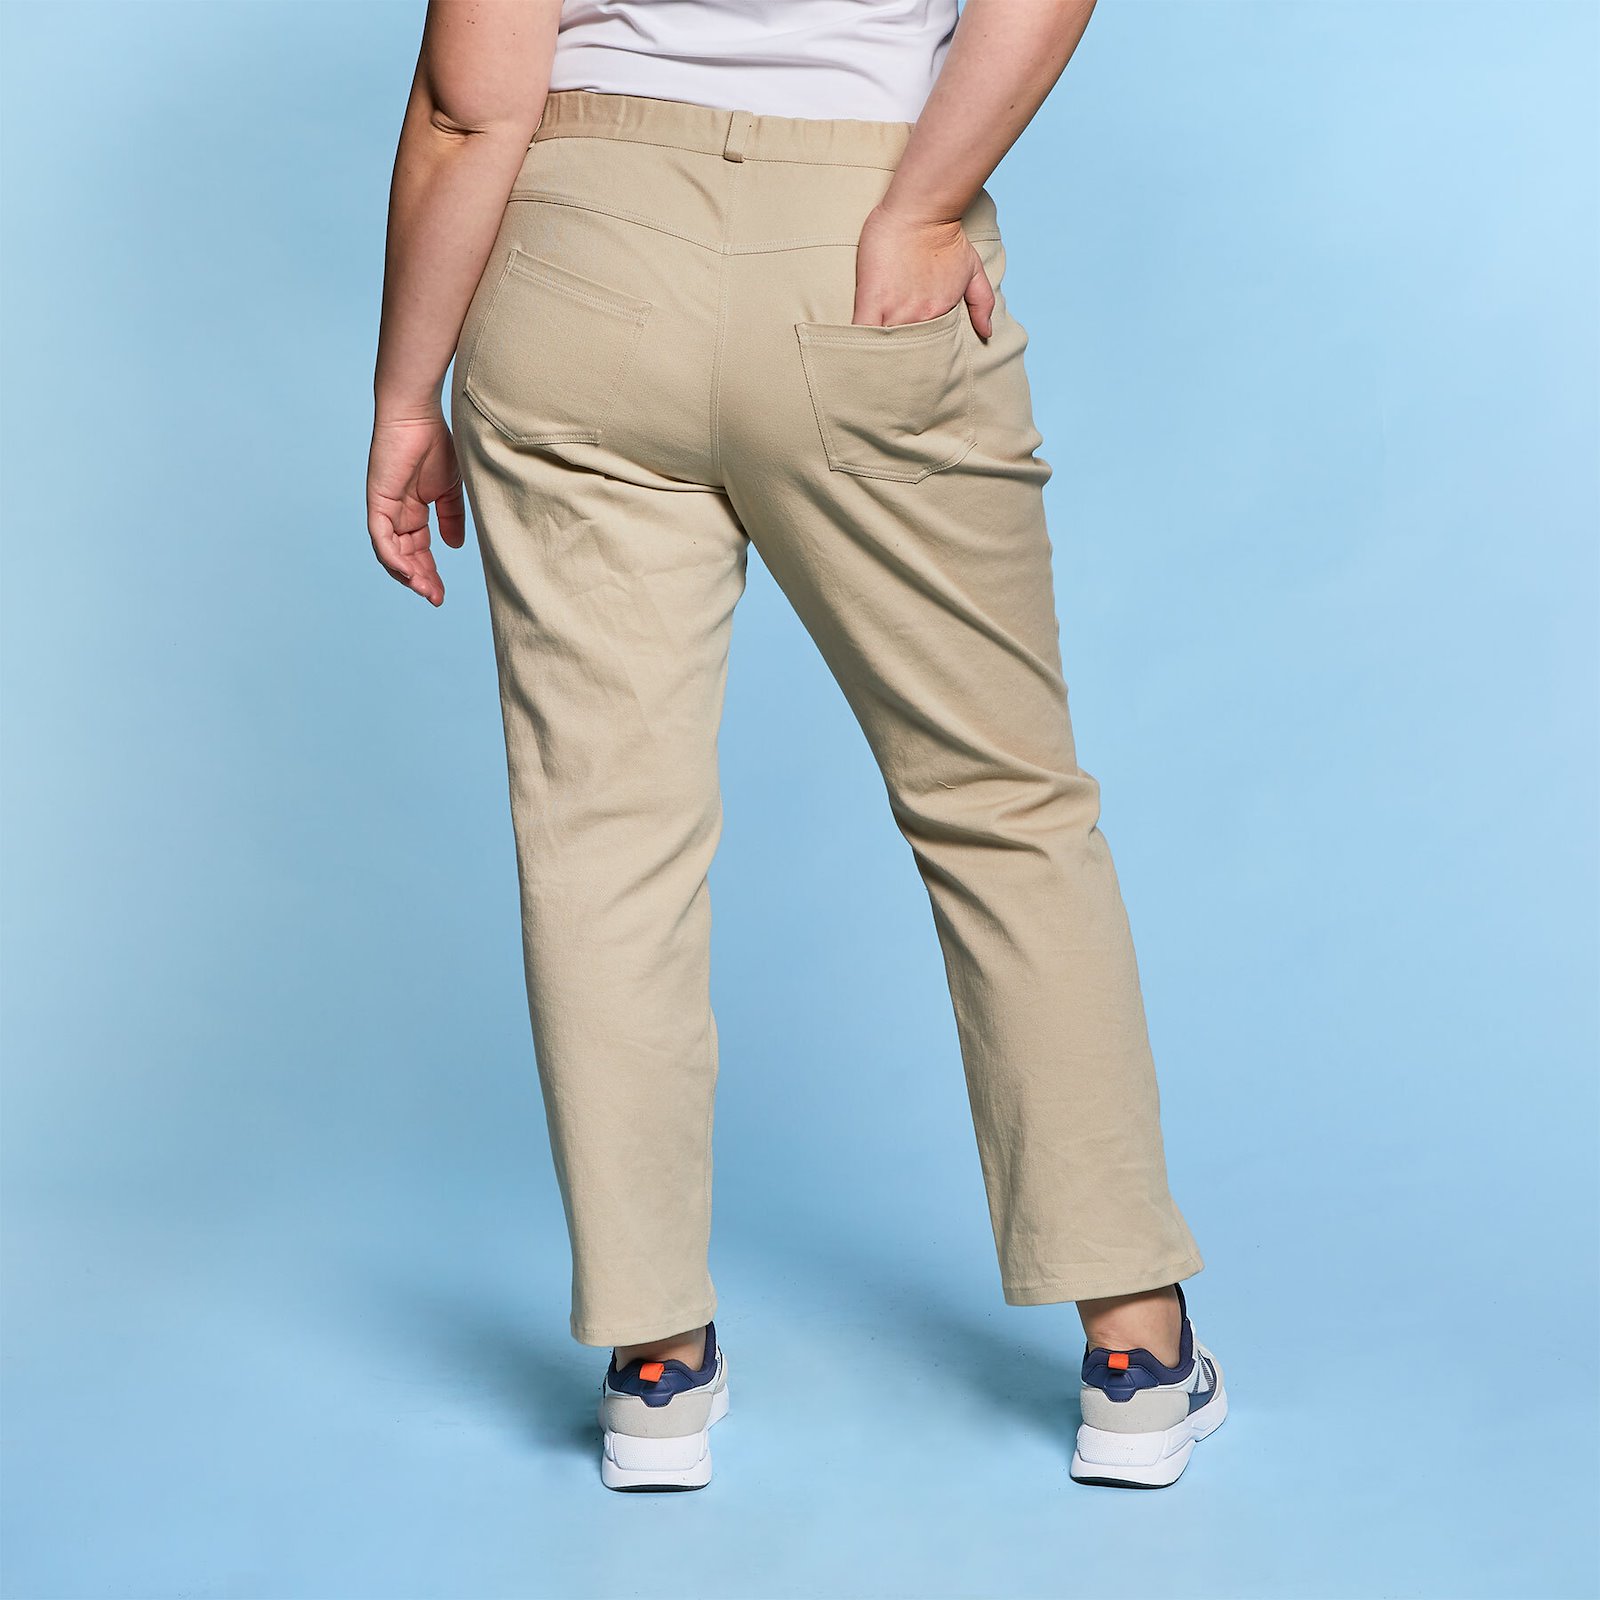 Classic jeans w. elastic waistban, 56/28 p70007000_p70007001_p70007002_p70007003_p70007004_pack_e